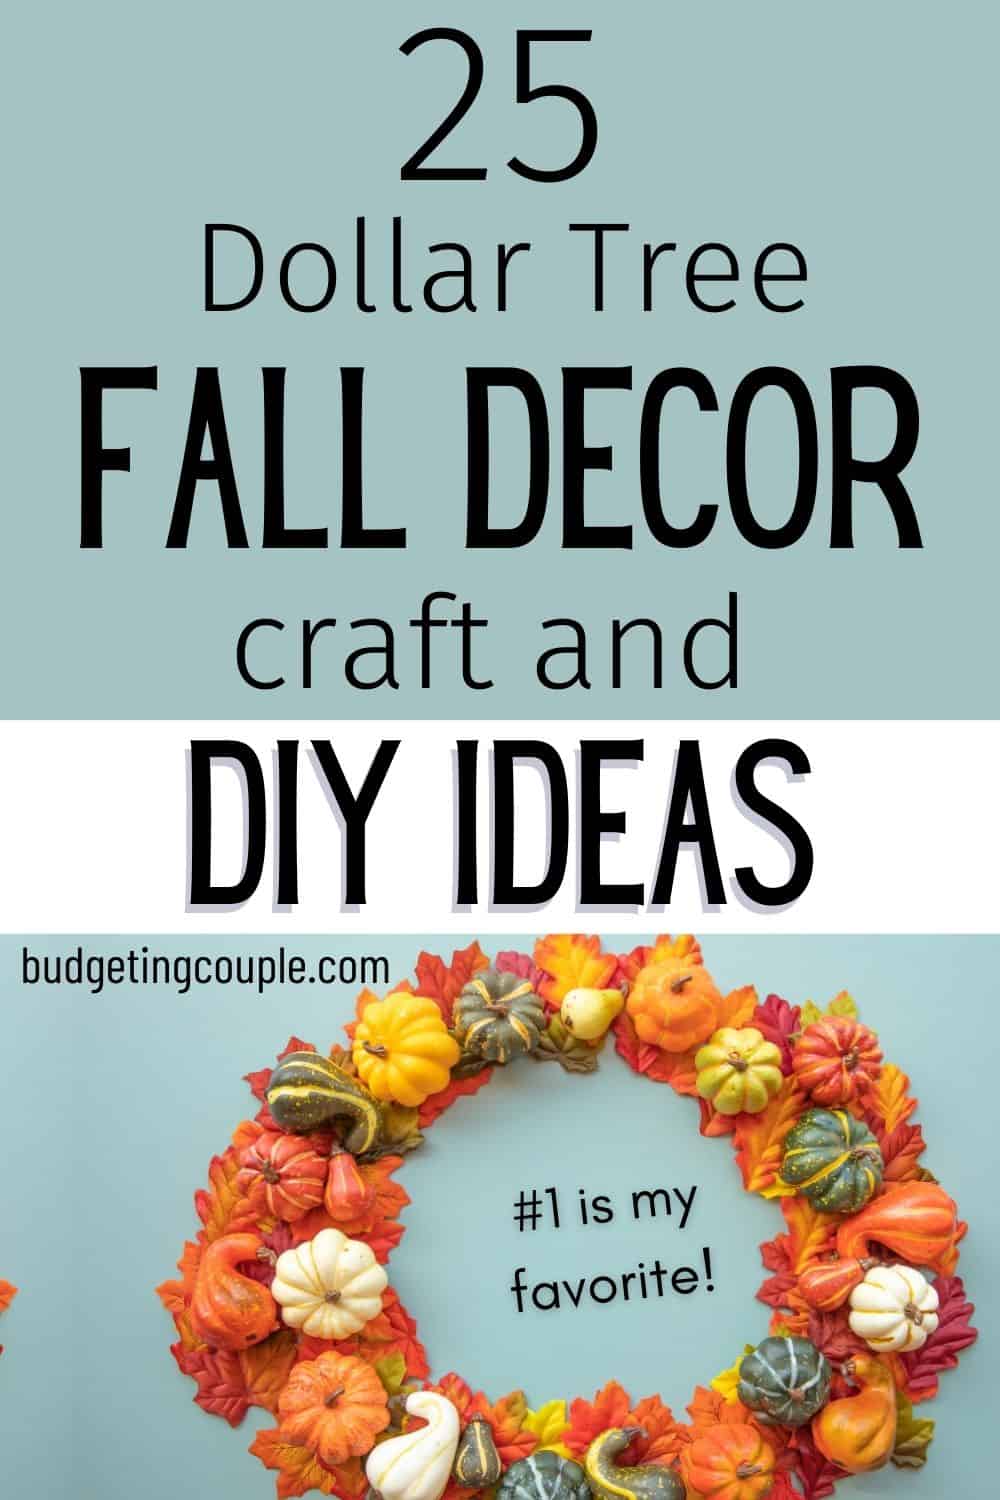 25 Dollar Tree Fall Decor DIY Ideas - Budgeting Couple